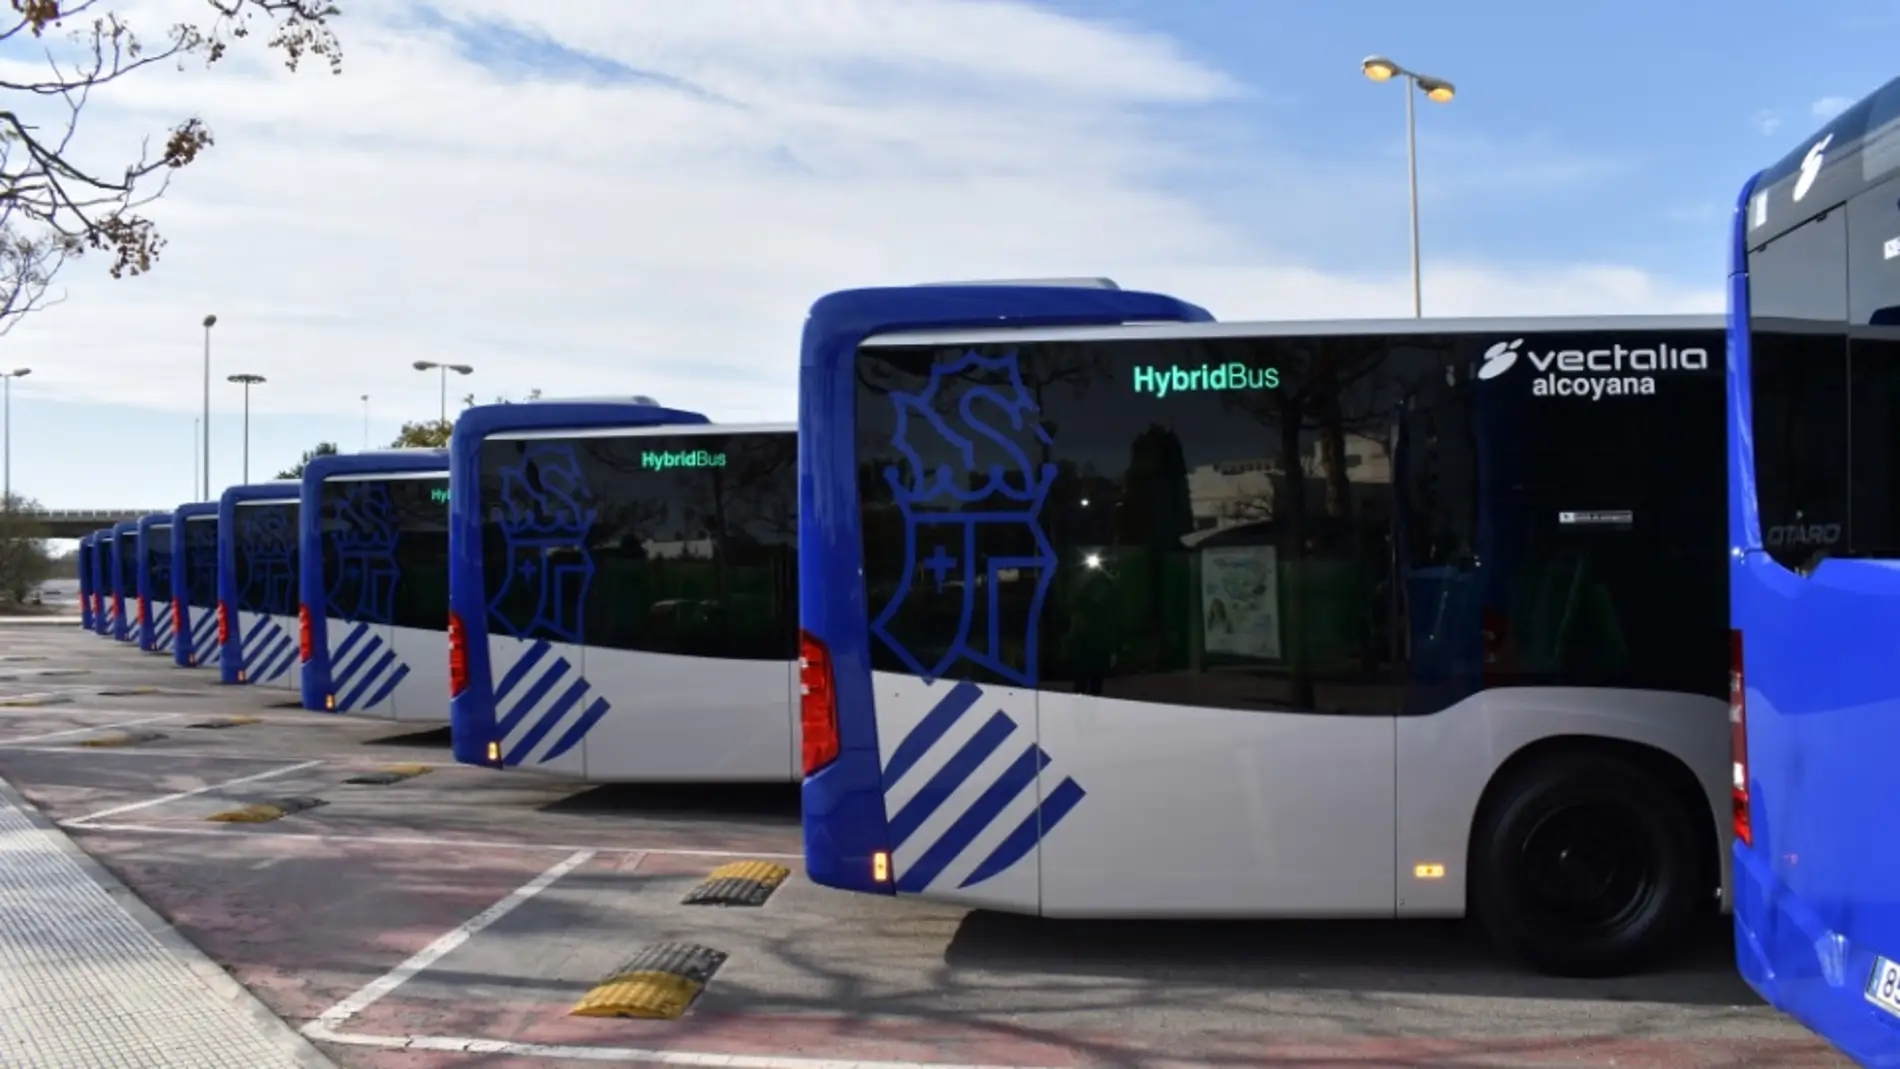 Autobuses de La Alcoyana